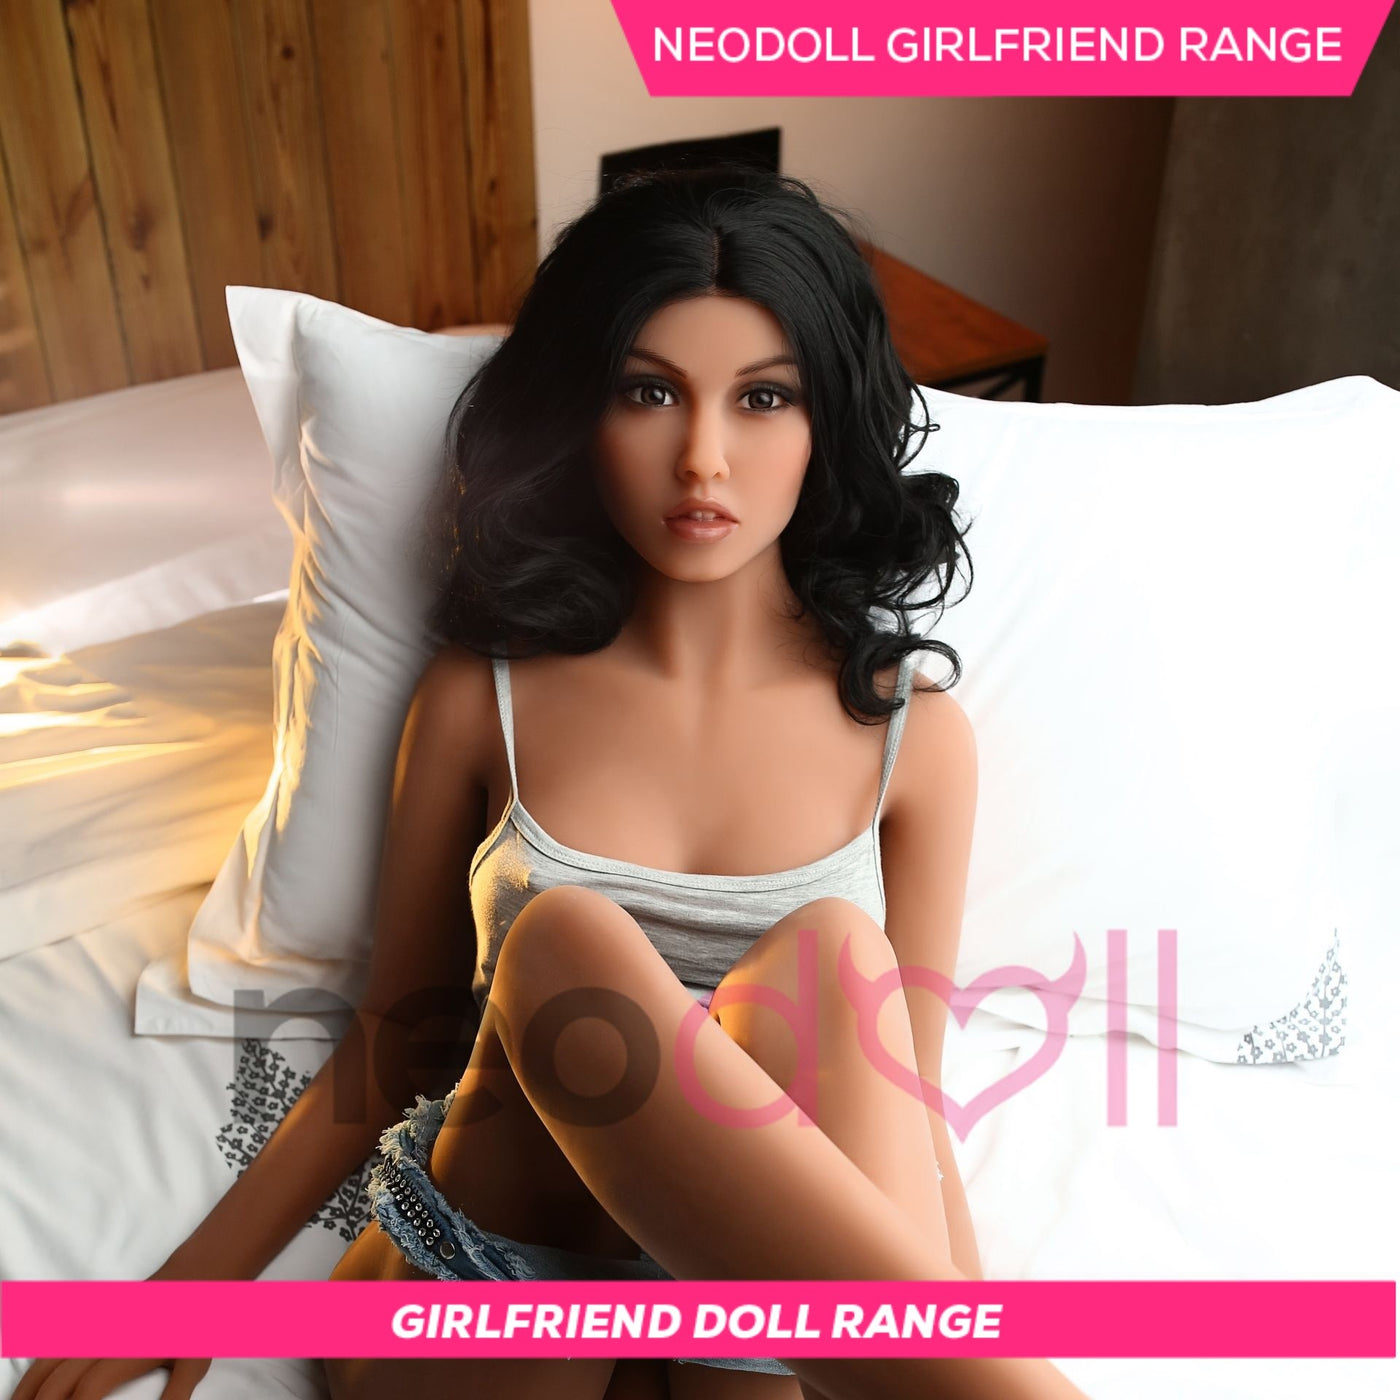 Neodoll - Rosie 158cm - Black Curley  - Girlfriend Range - Realistic Doll - Tan